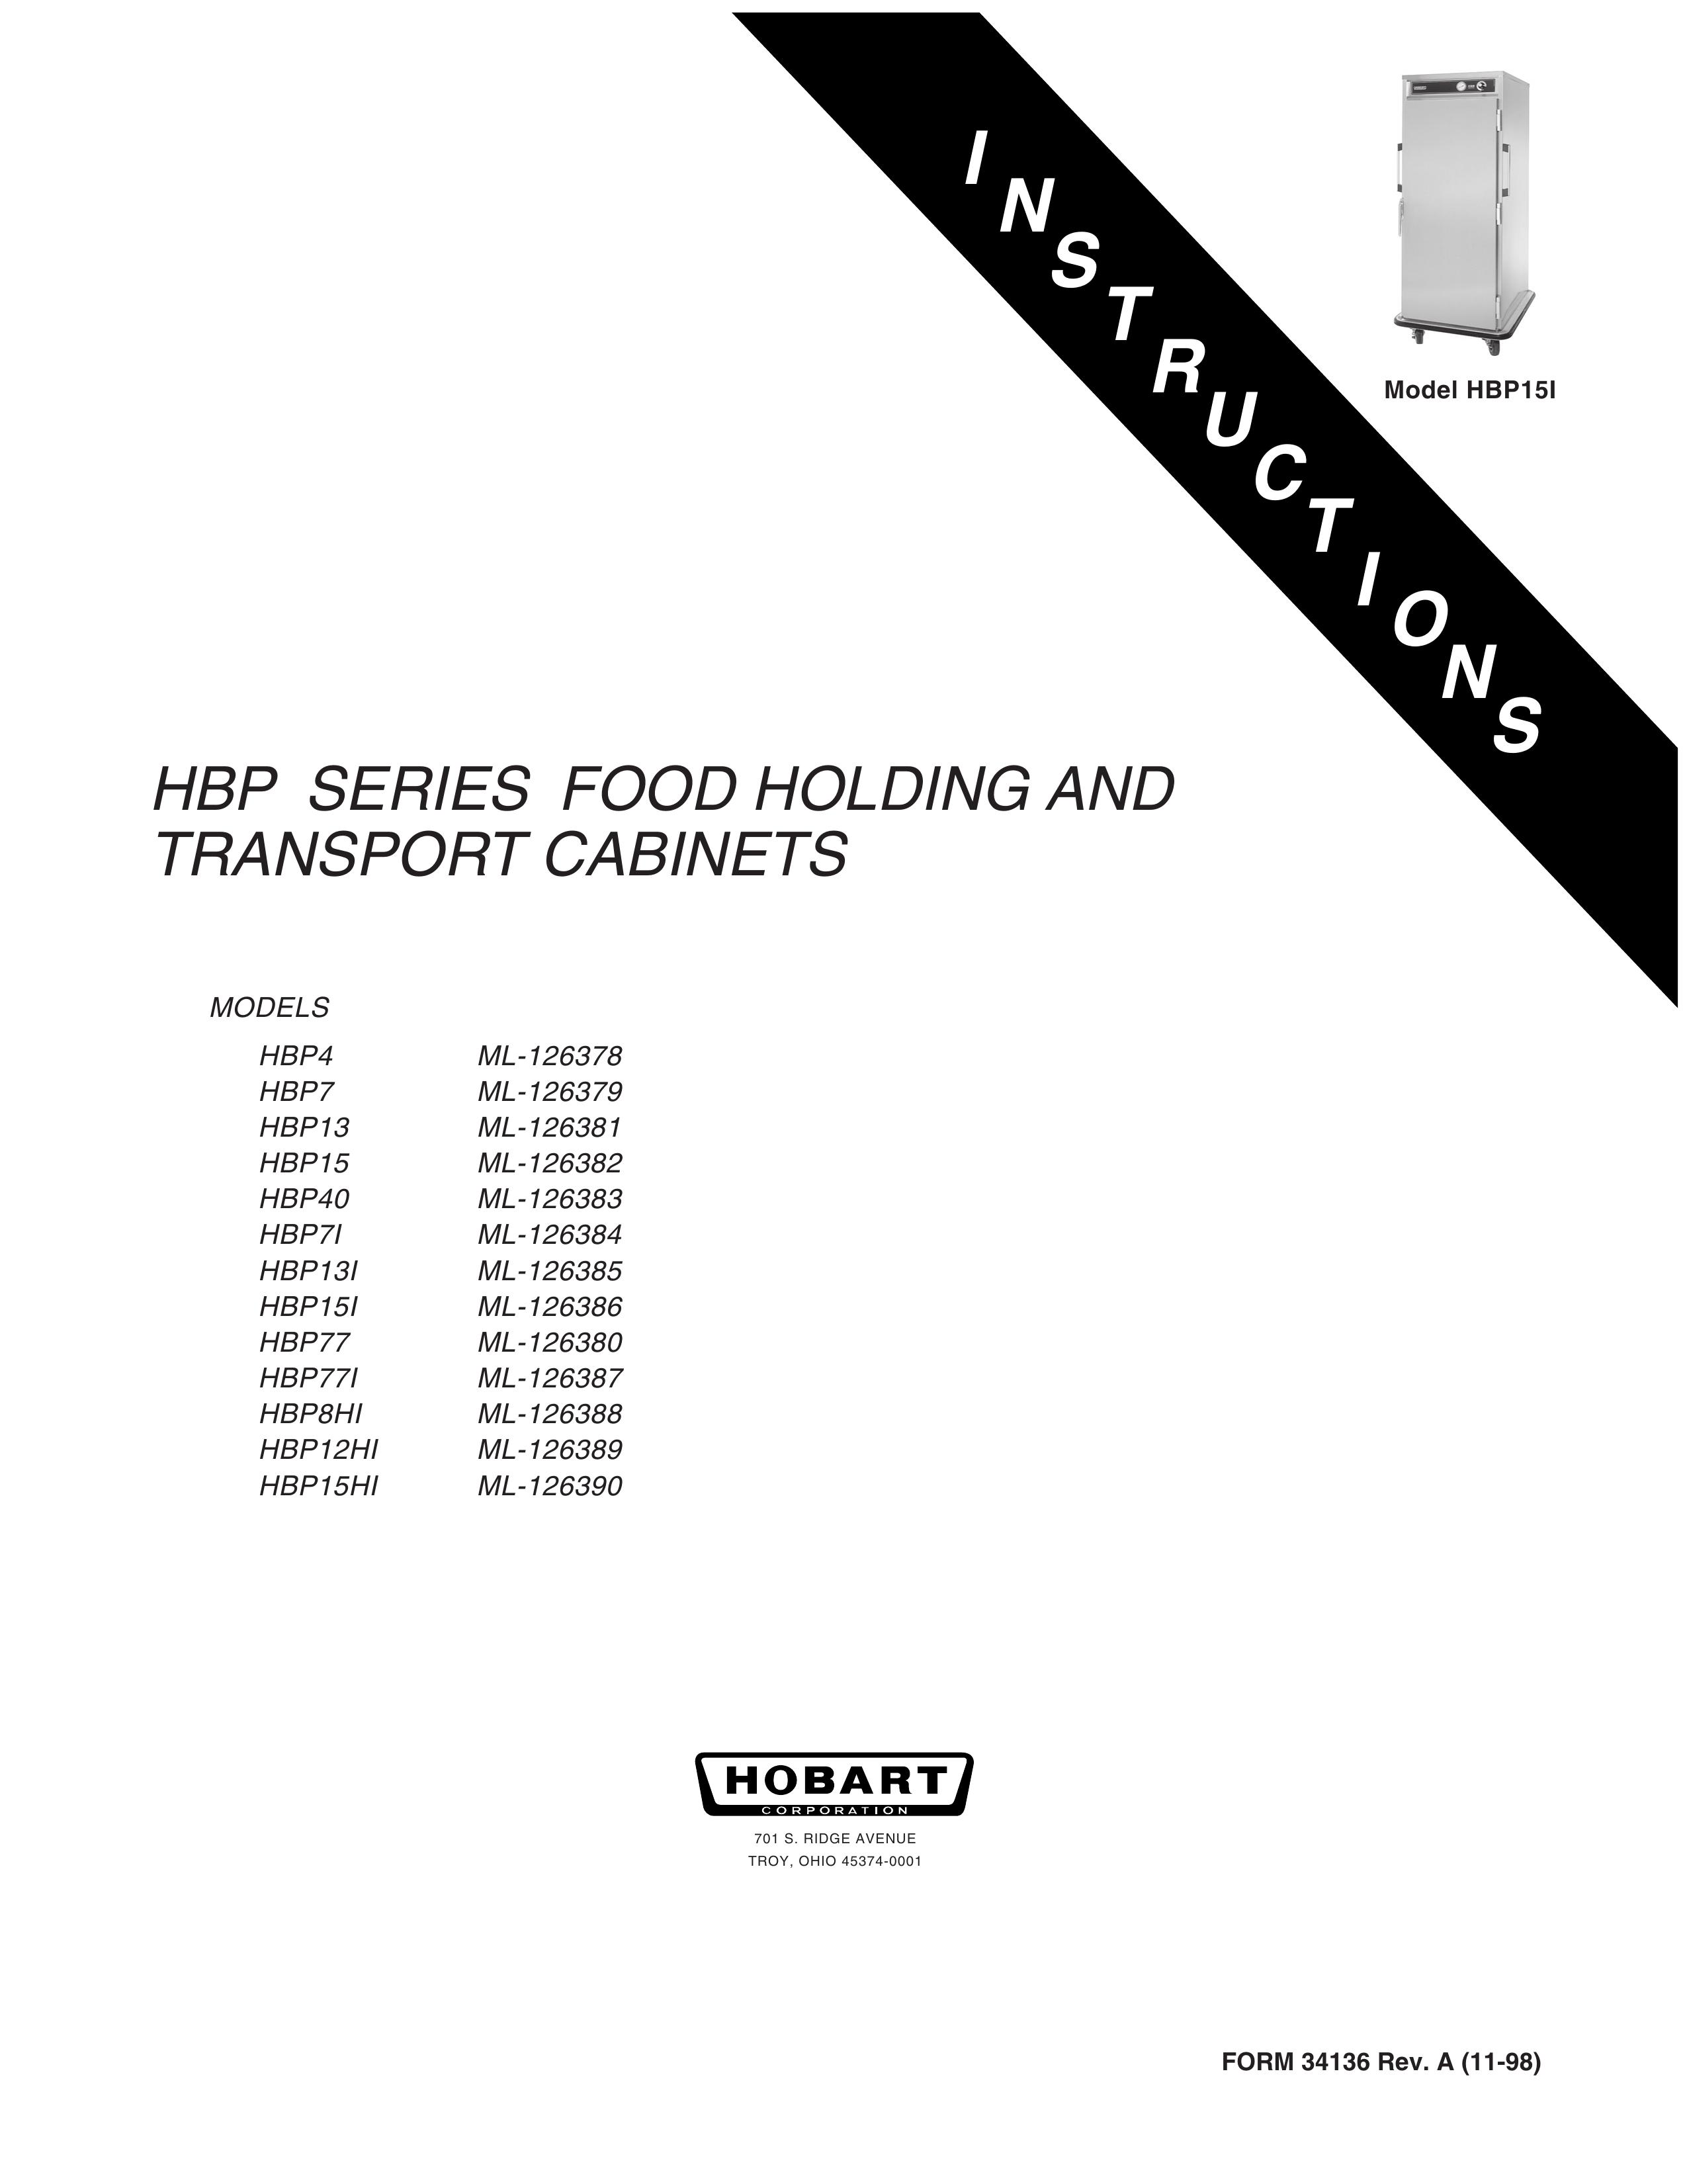 Hobart HBP13I ML-126385 Outdoor Storage User Manual